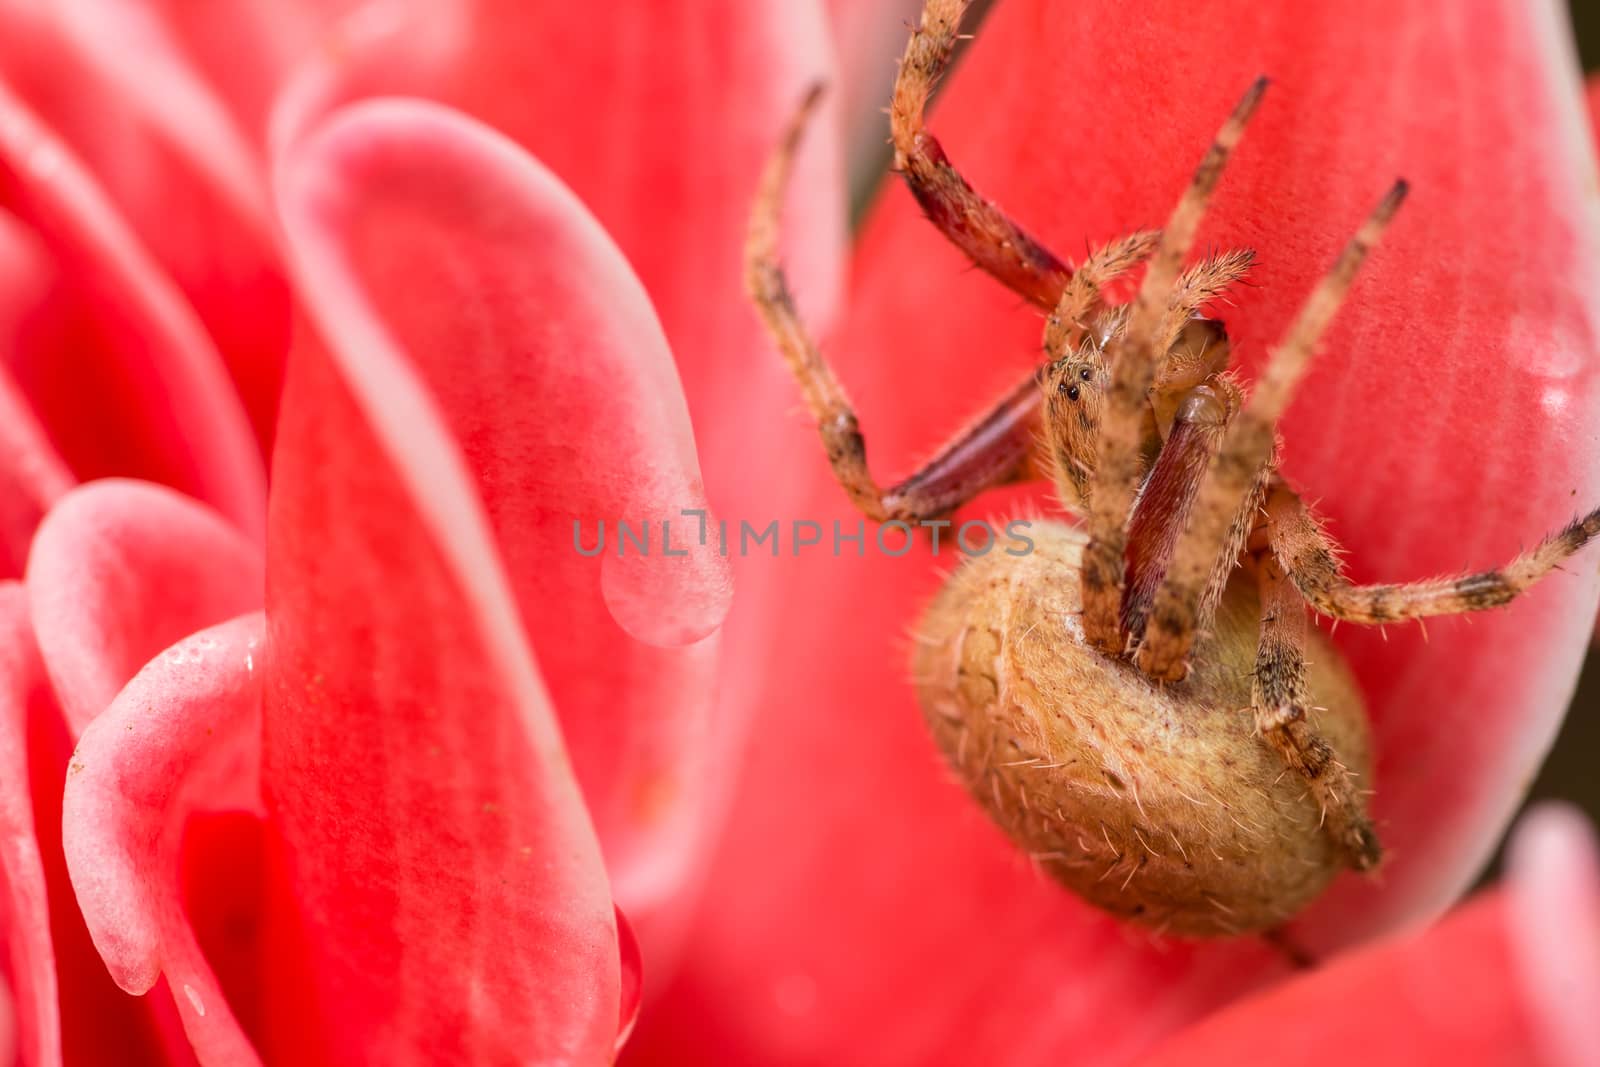 Brown spider in pink background  by prajit48